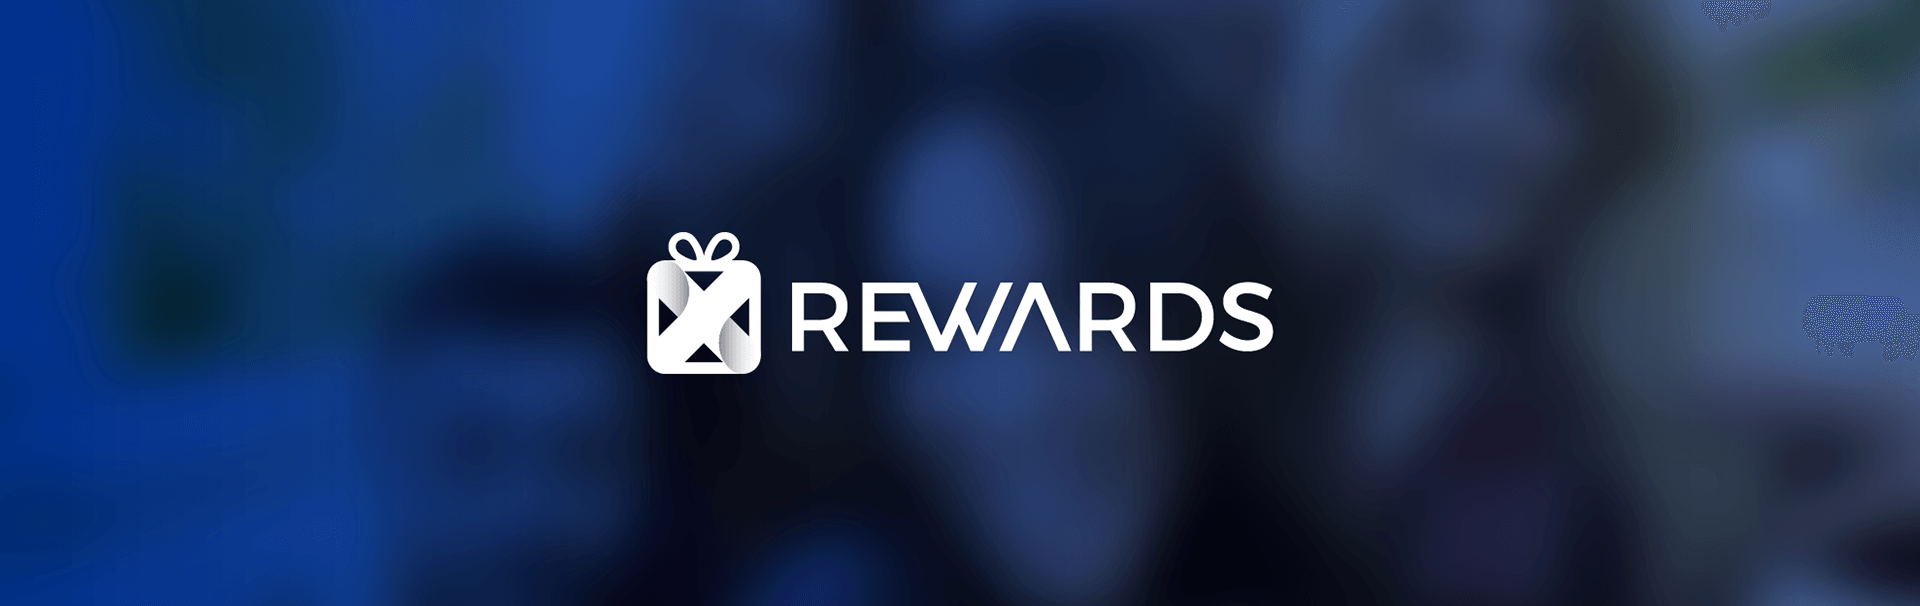 x-rewards_logo_reversed